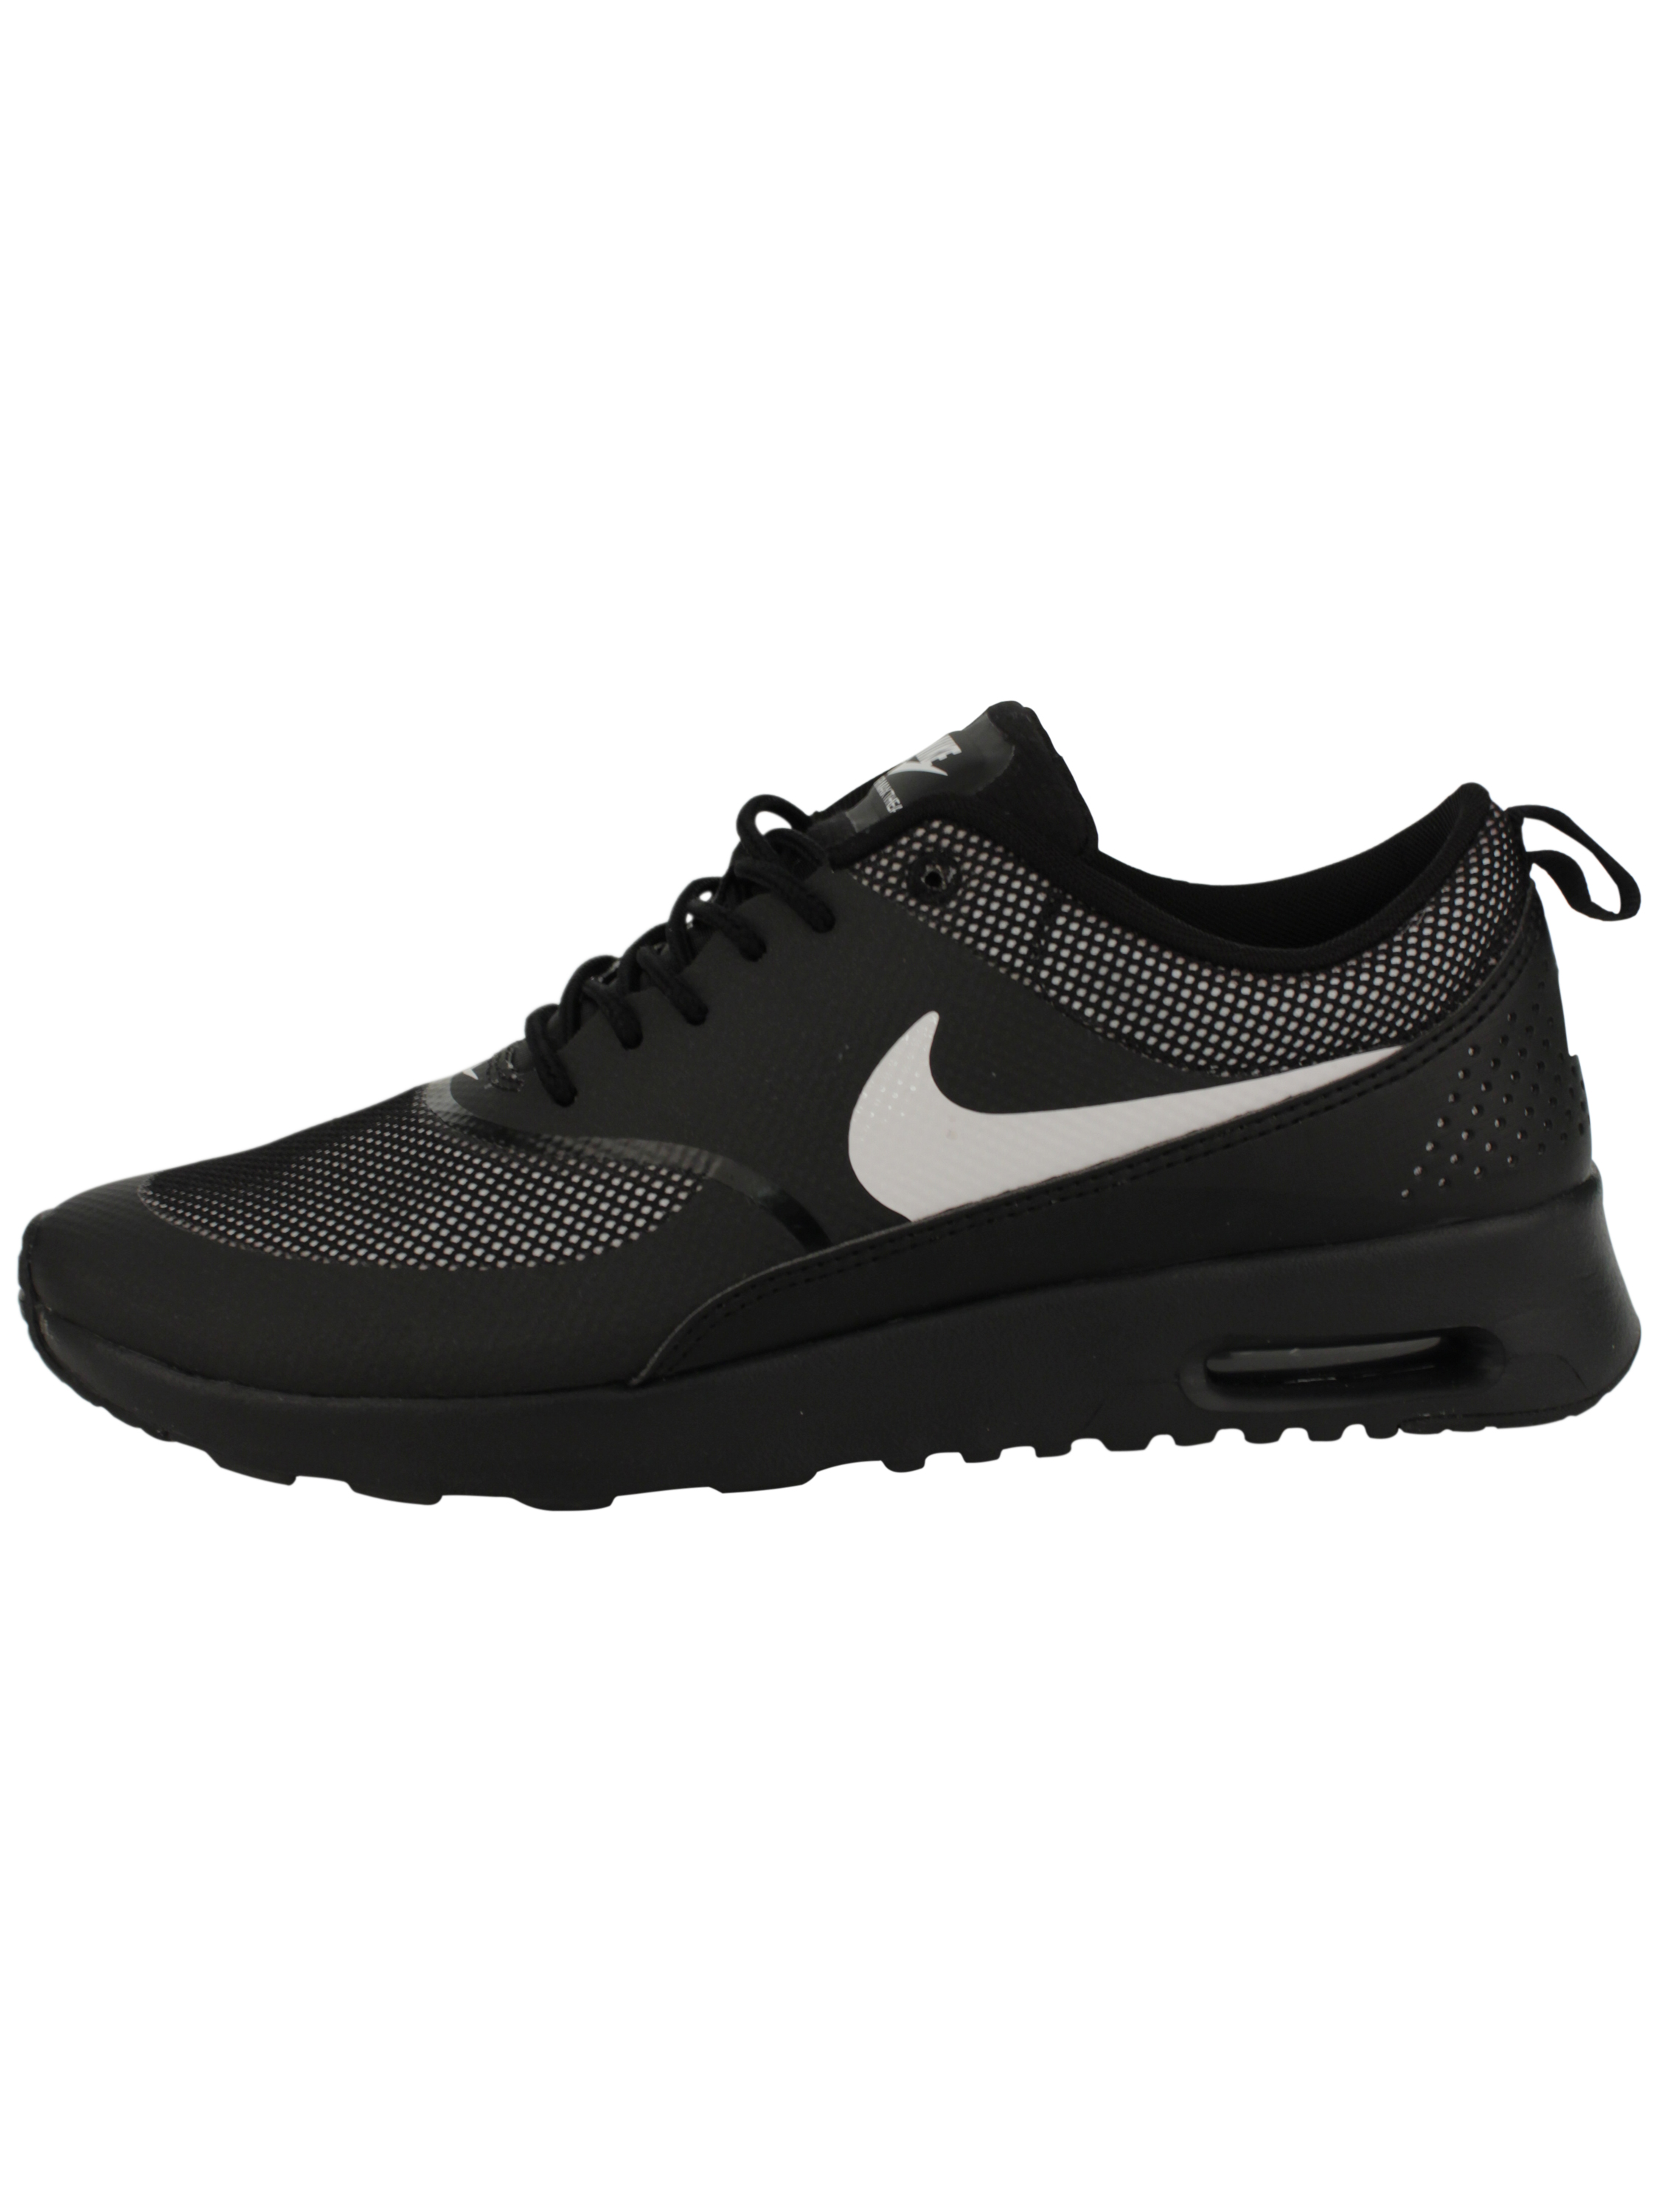 Buy Nike 'Air Max Thea' Shoes - Black